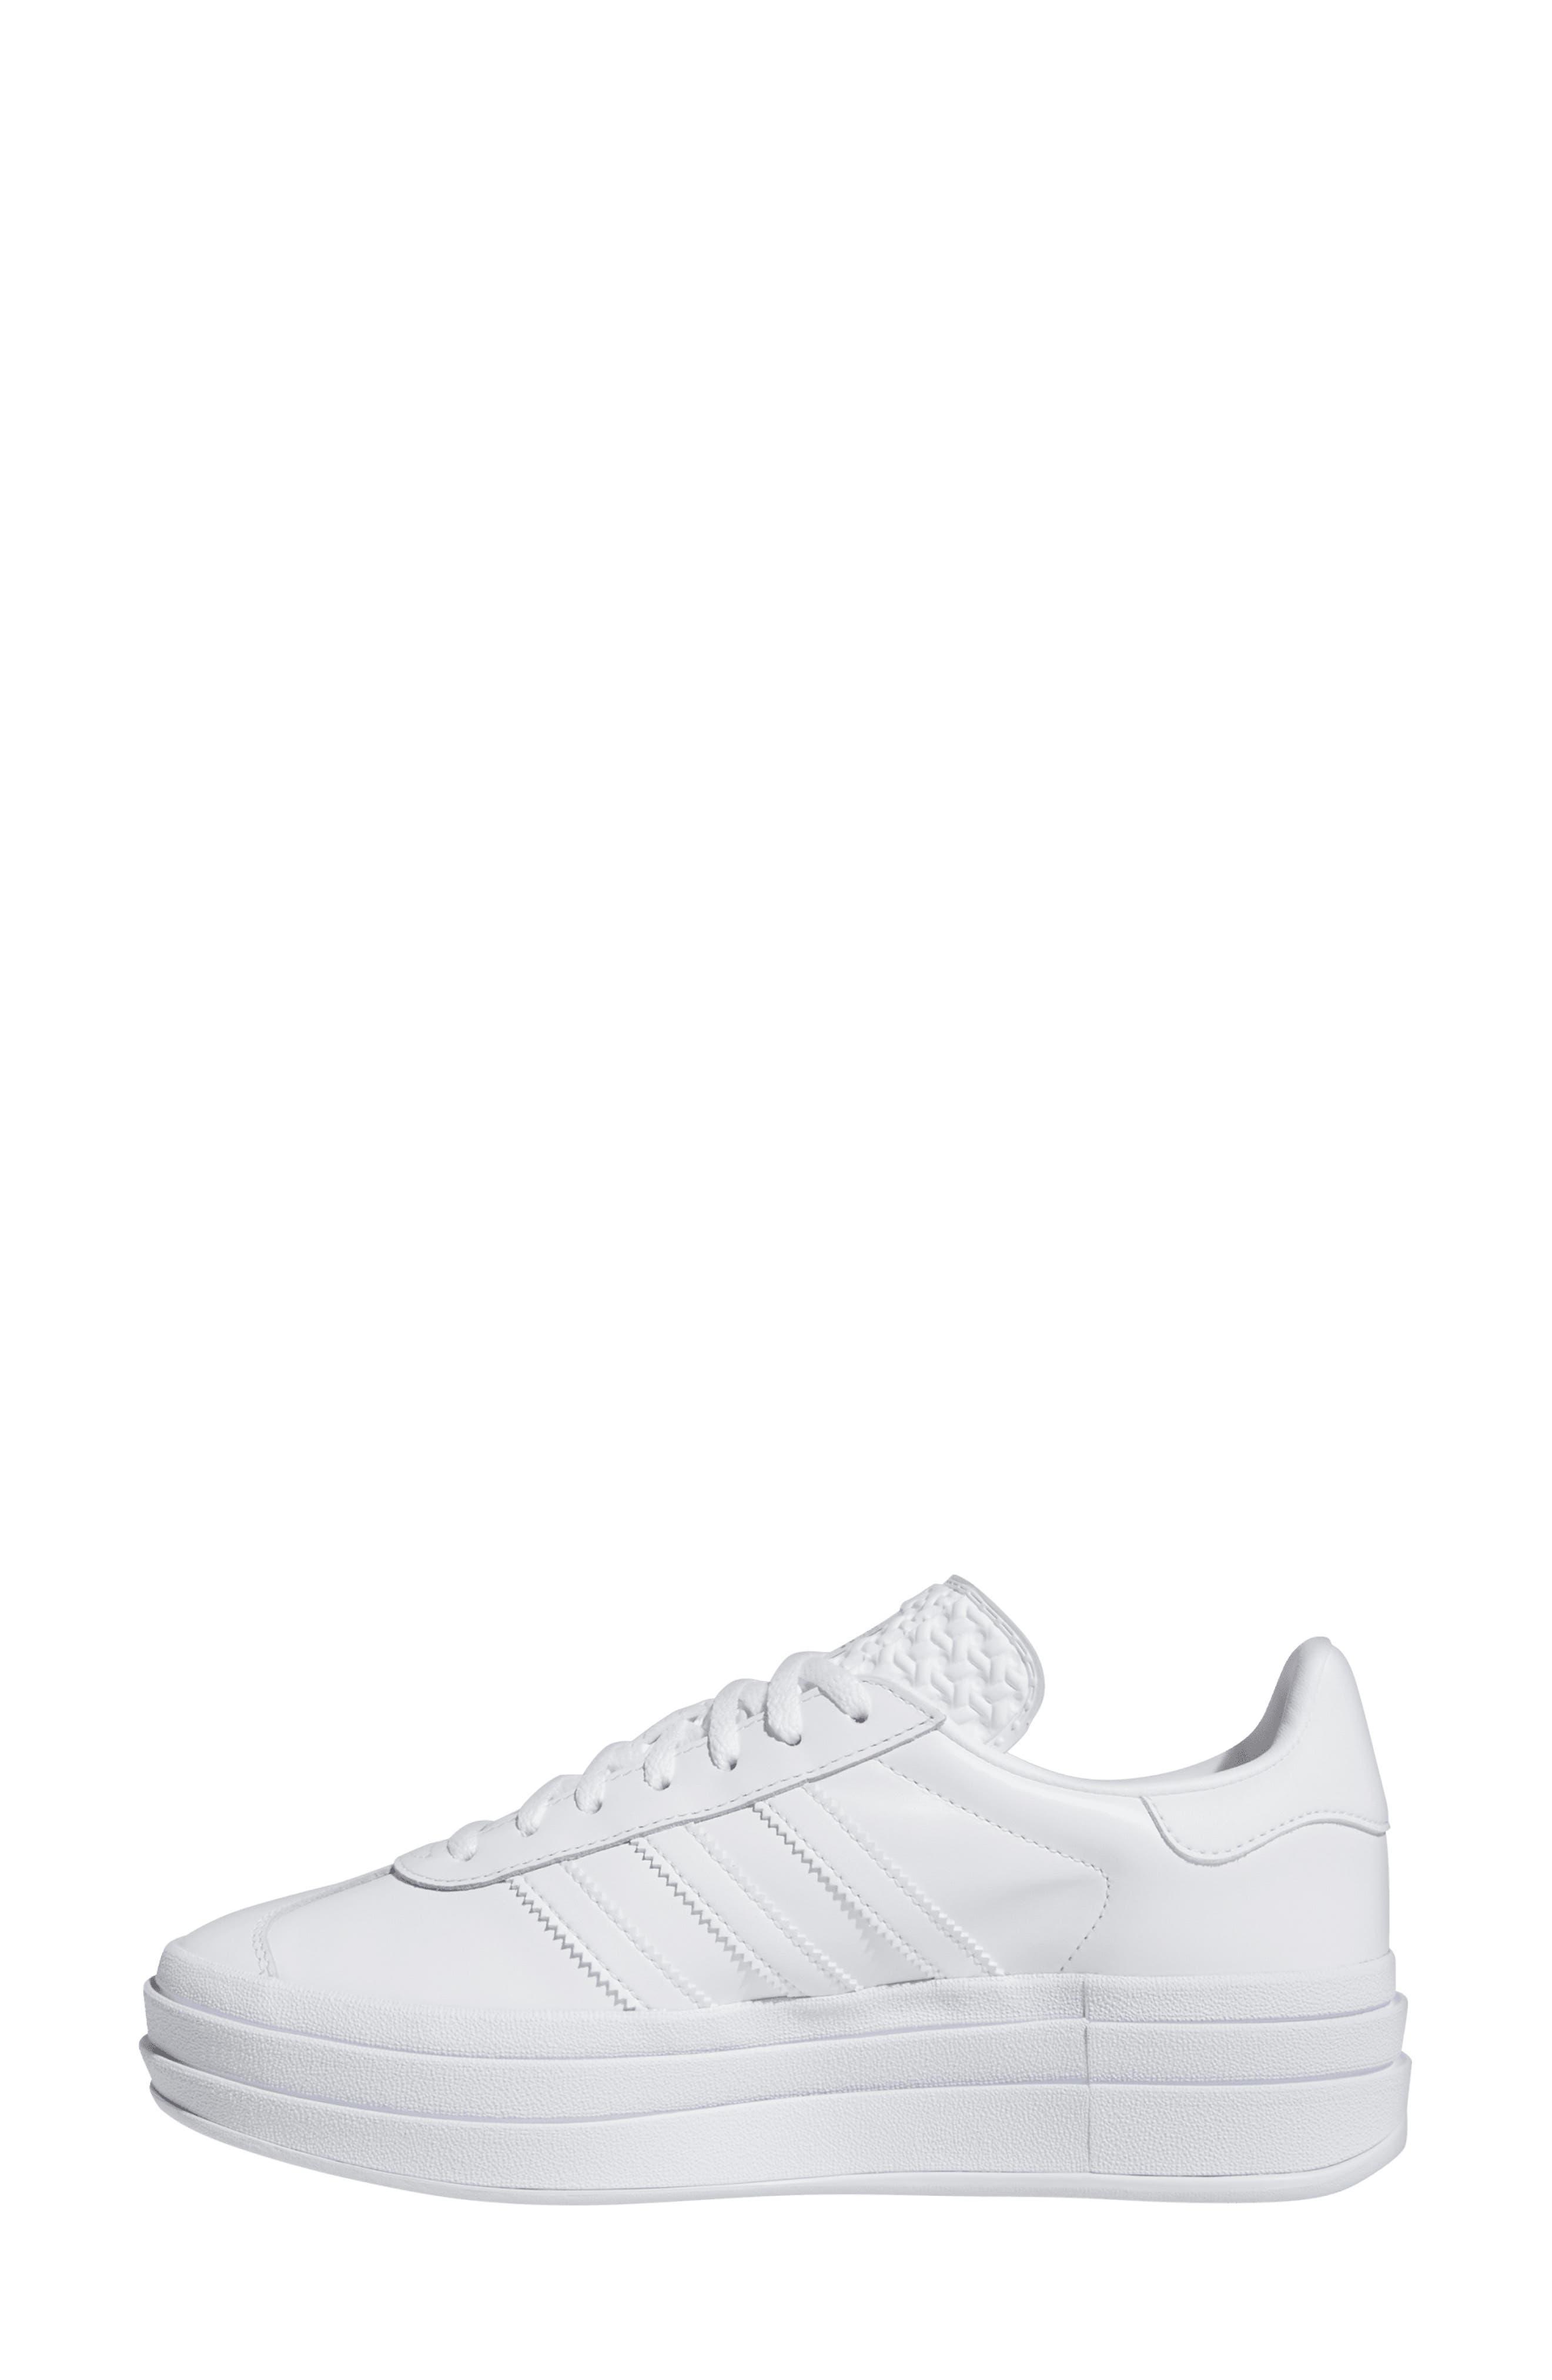 adidas Gazelle Bold in White Lyst